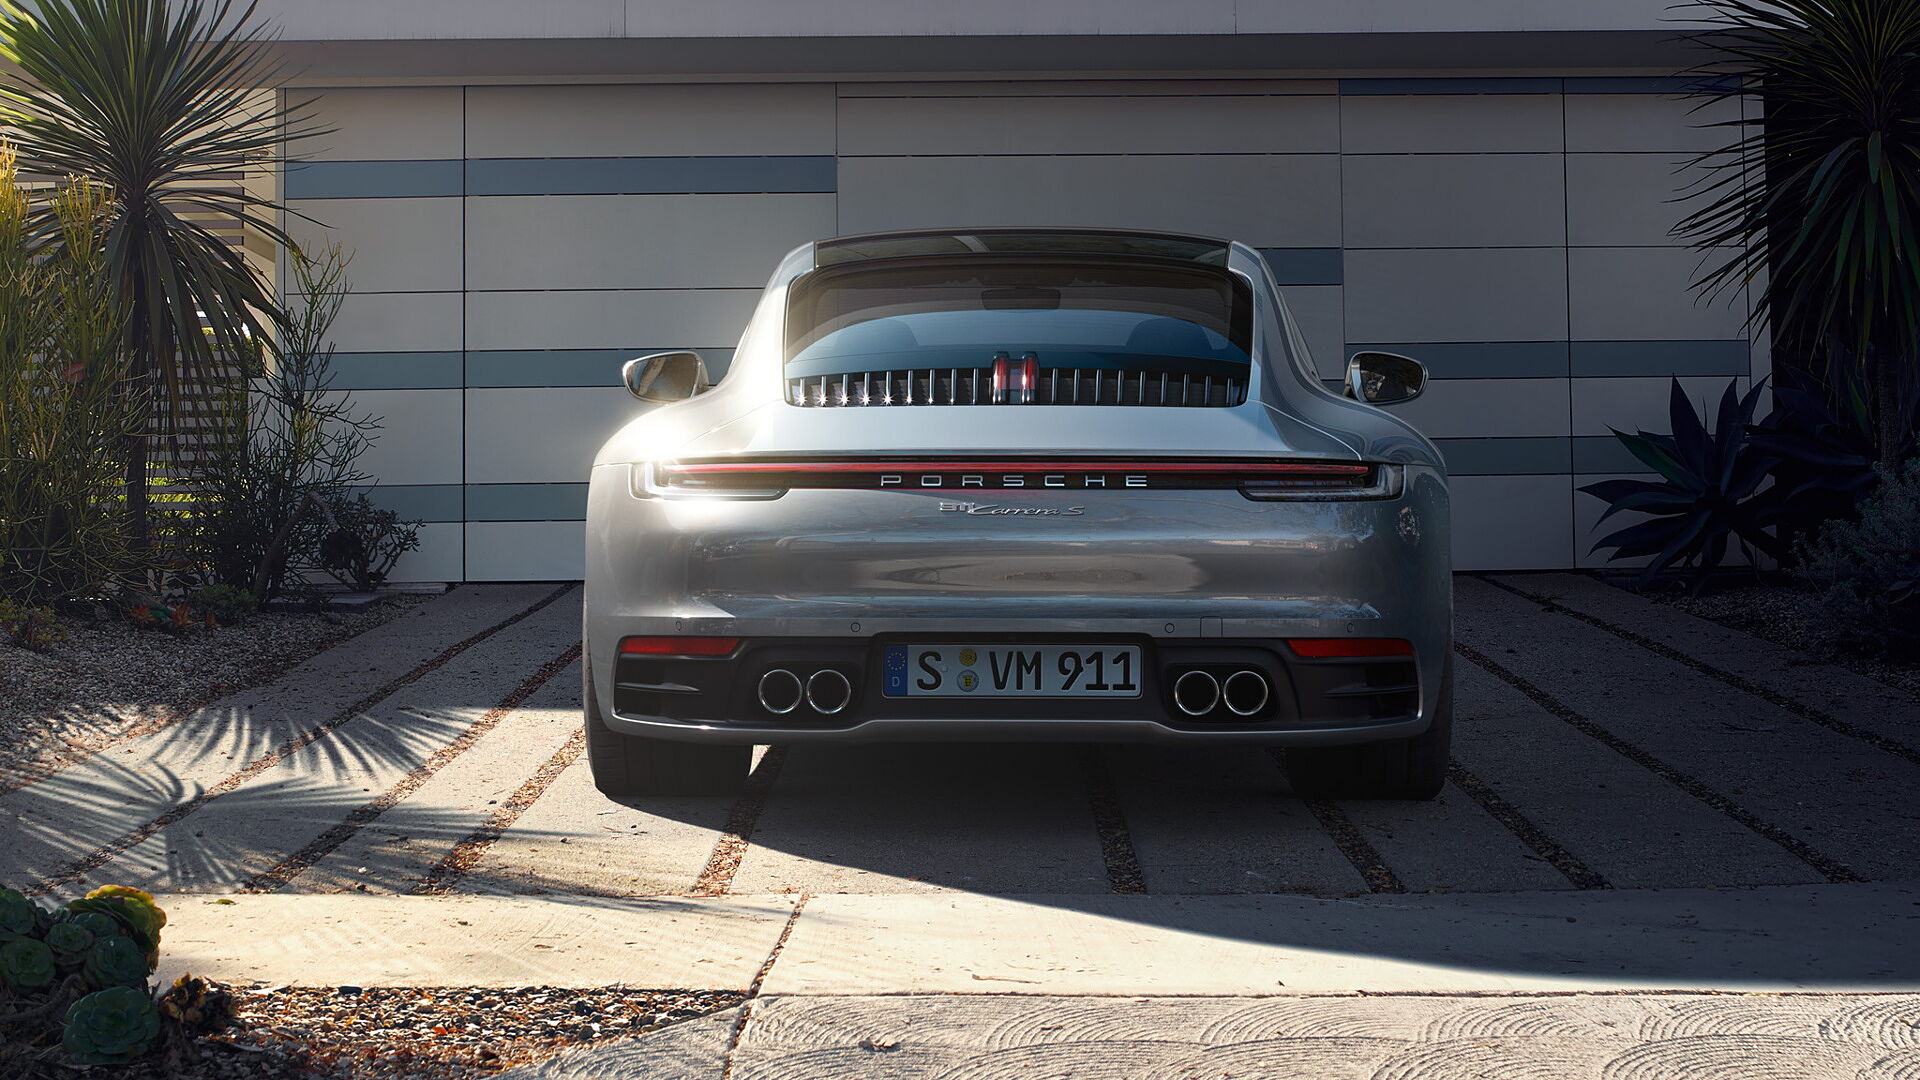 Porsche 911 Mileage (8-11 km/l) - 911 Petrol Mileage - CarWale